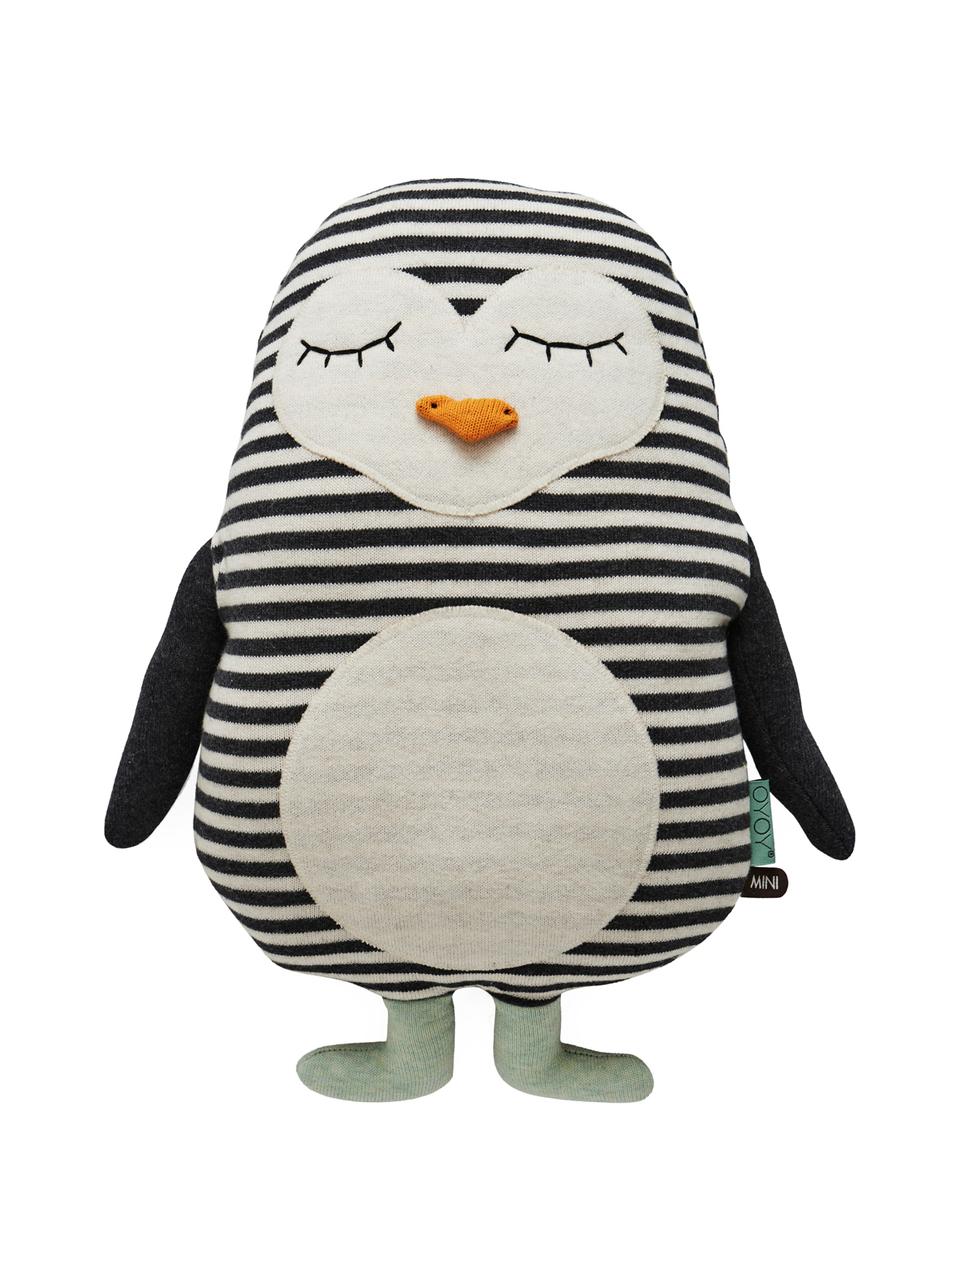 Peluche pinguino soffice Pingo, Cotone, Bianco latteo, nero, Larg. 31 x Alt. 41 cm